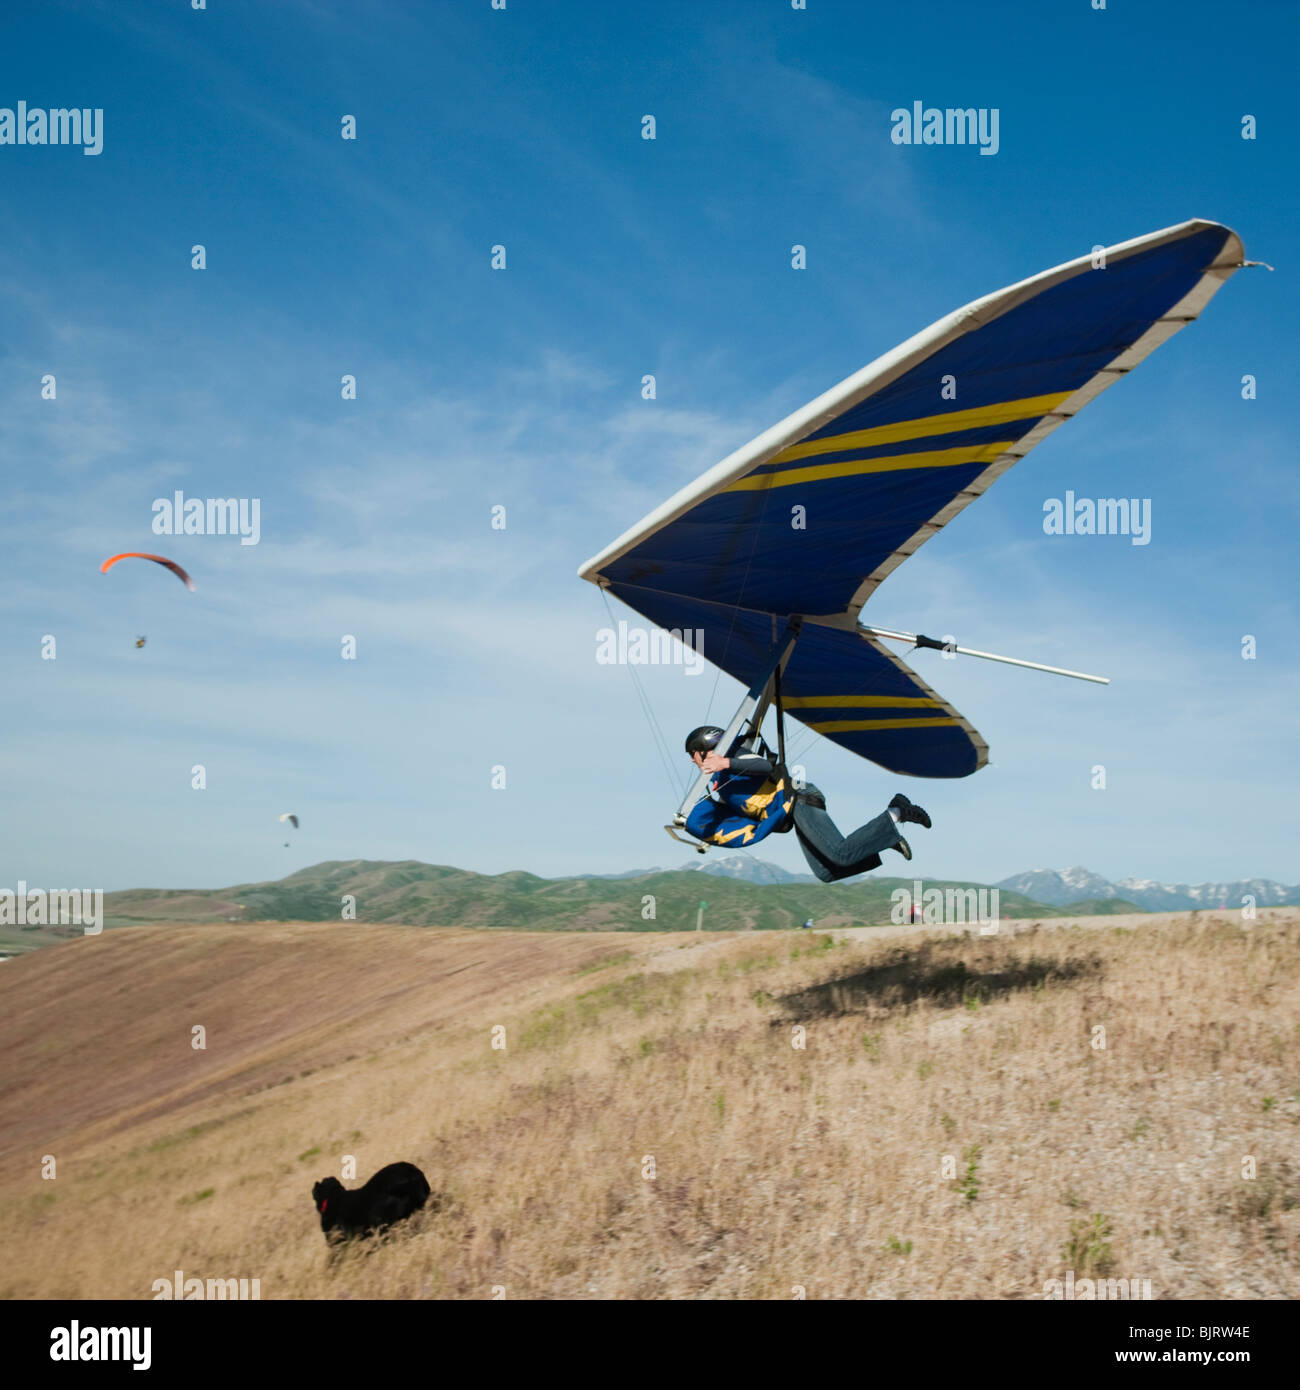 USA, Utah, Lehi, young man taking off with hang glider Stock Photo